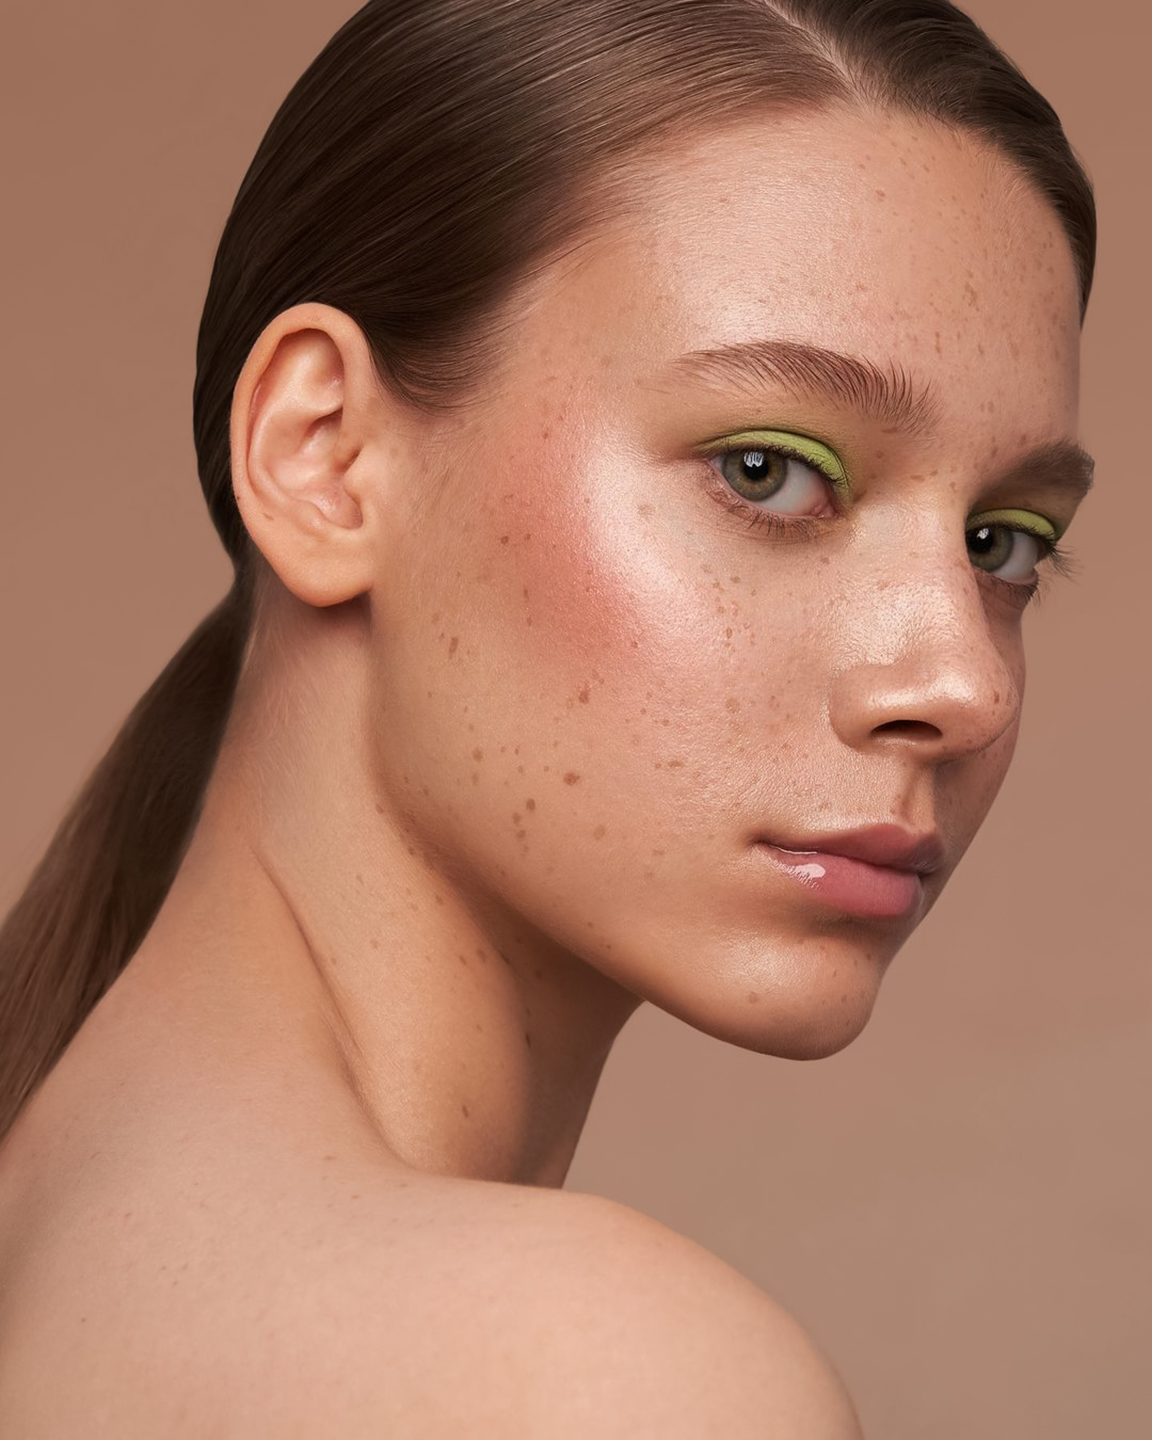 Sofia Saveleva Women Makeup Eyeshadow Portrait Freckles 1152x1440